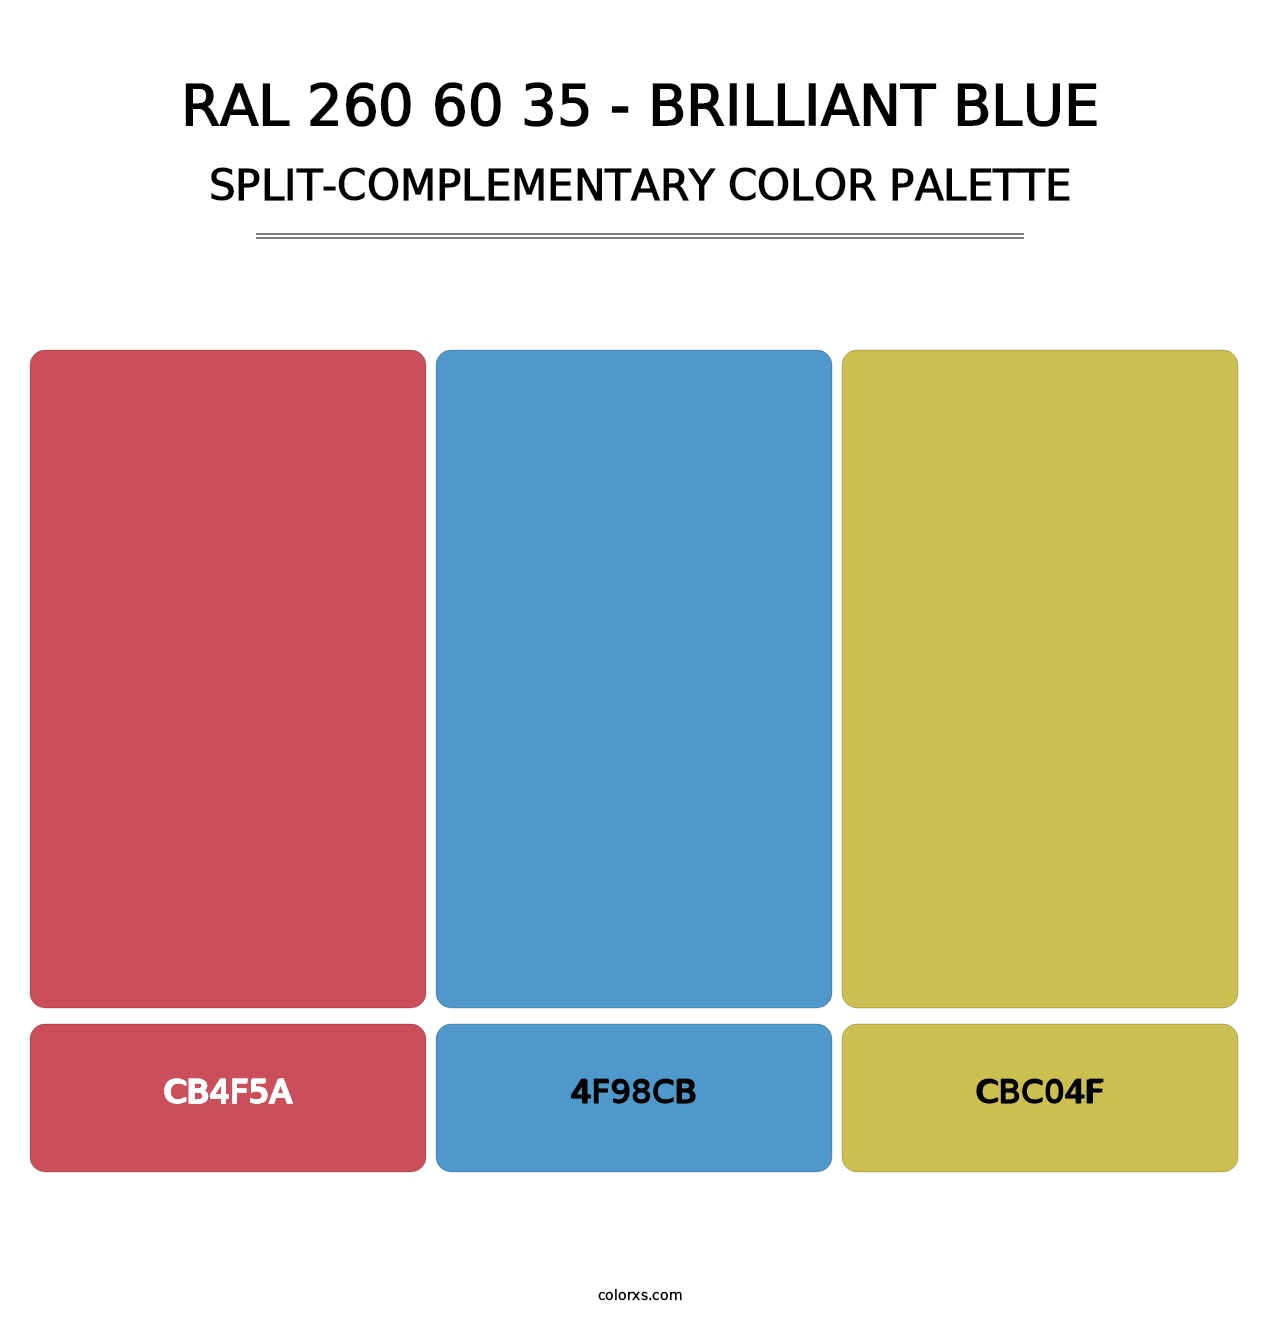 RAL 260 60 35 - Brilliant Blue - Split-Complementary Color Palette